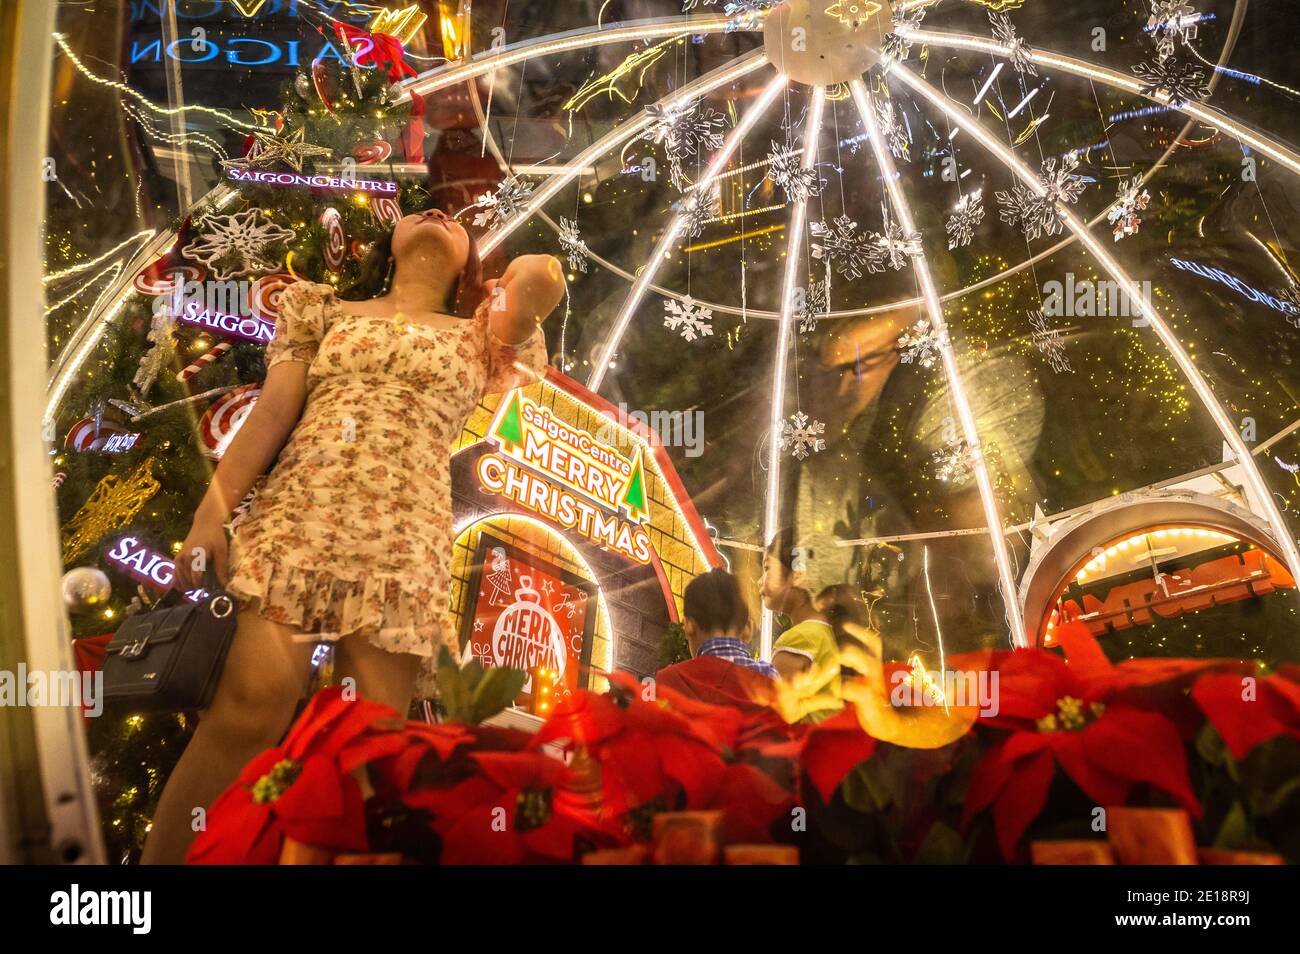 People posing among the Christmas decorations outside of Saigon Center, Ho Chi Minh City, Vietnam Stock Photo